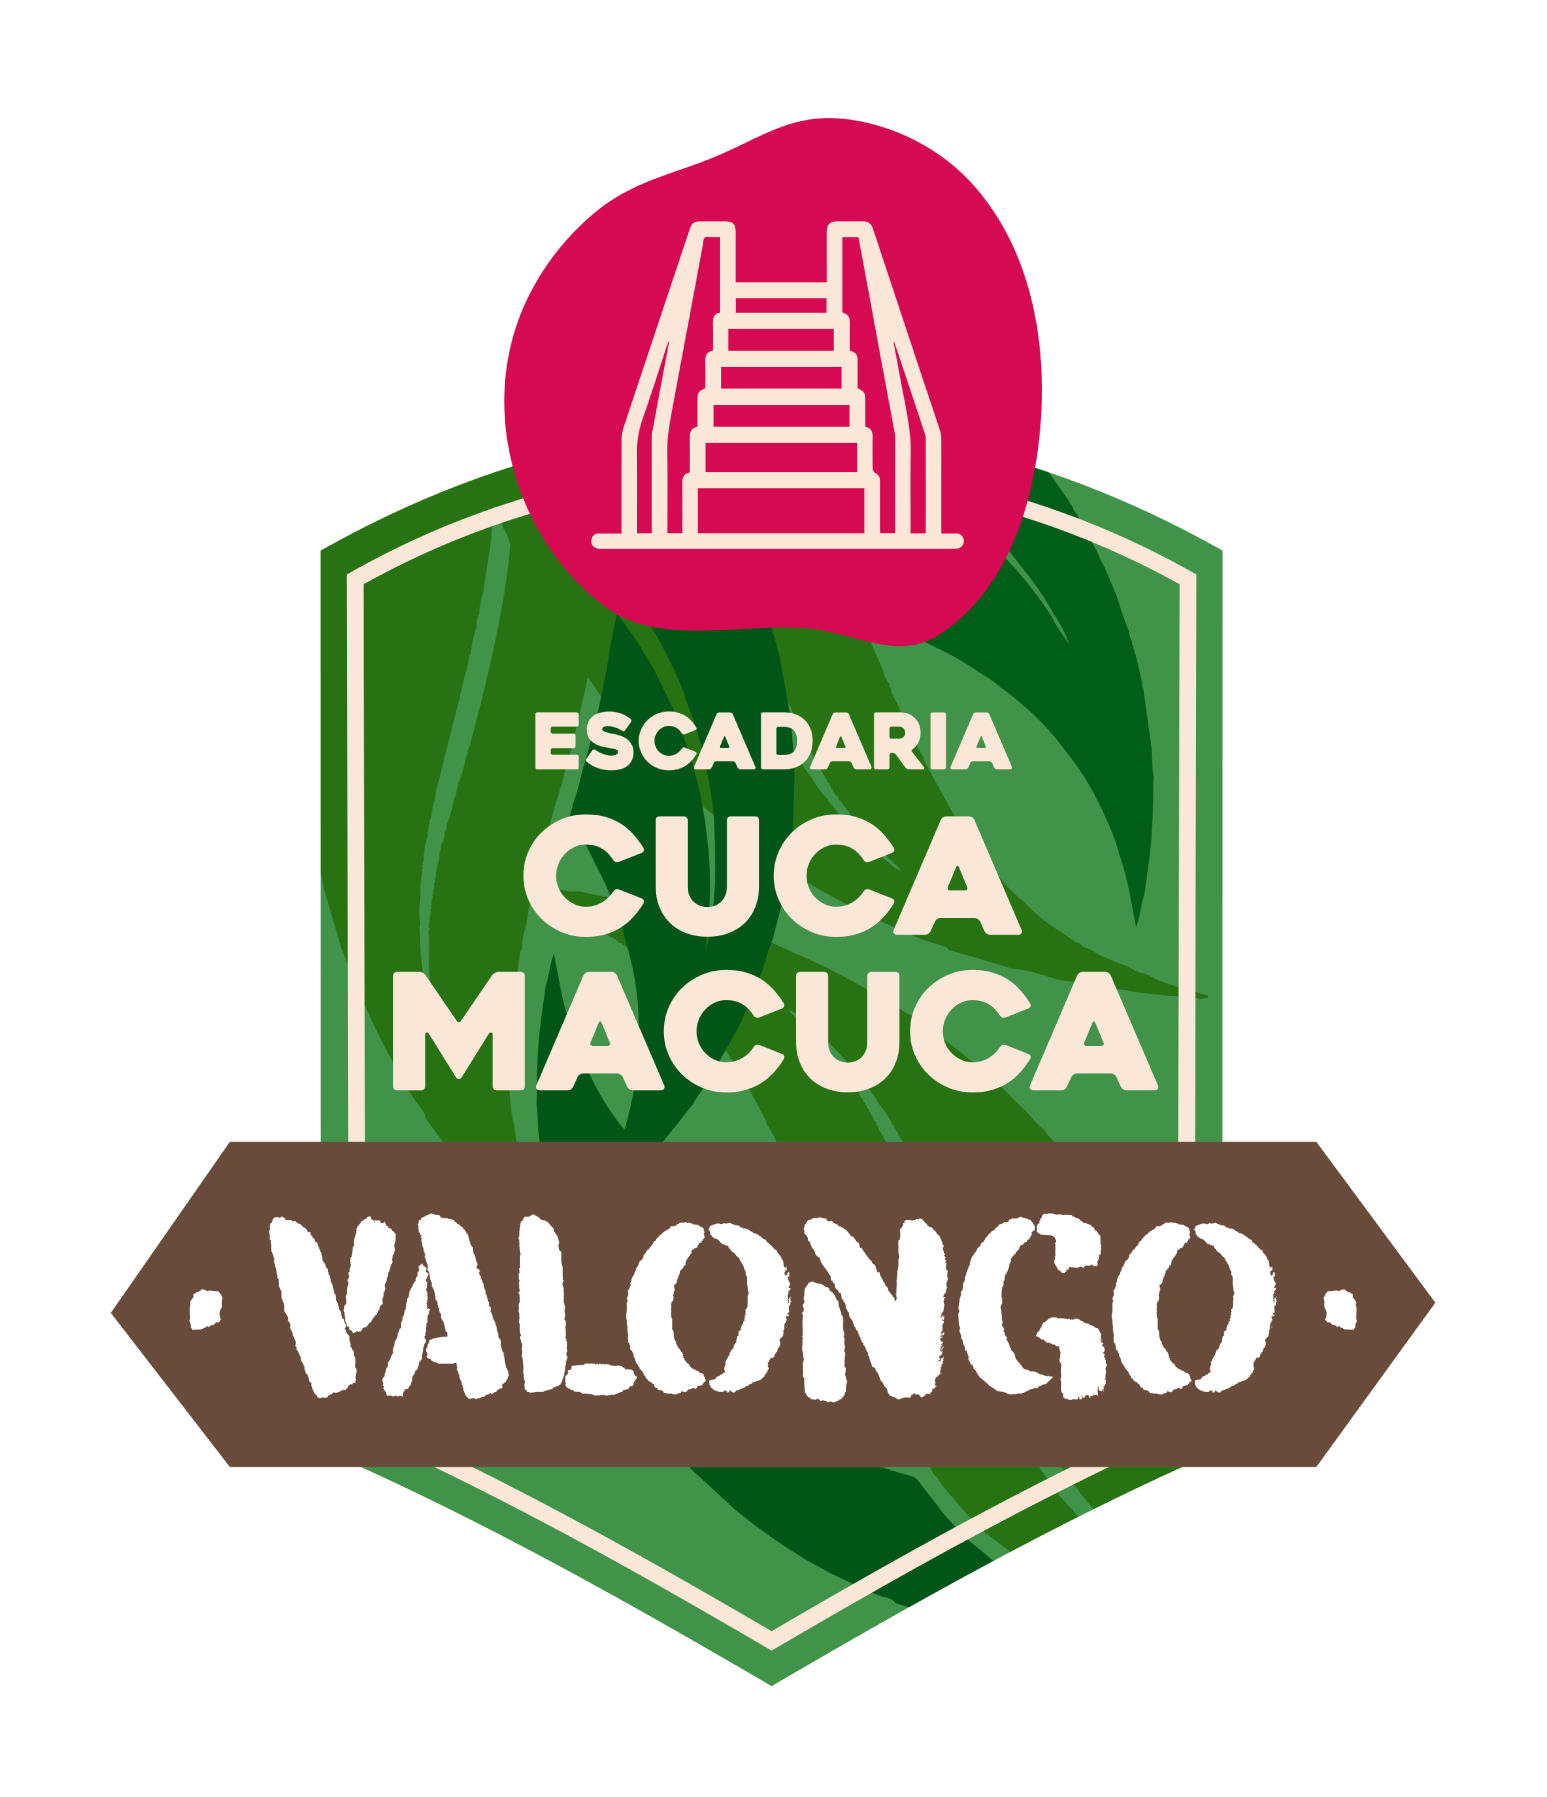 Escadaria Cucamacuca - Valongo